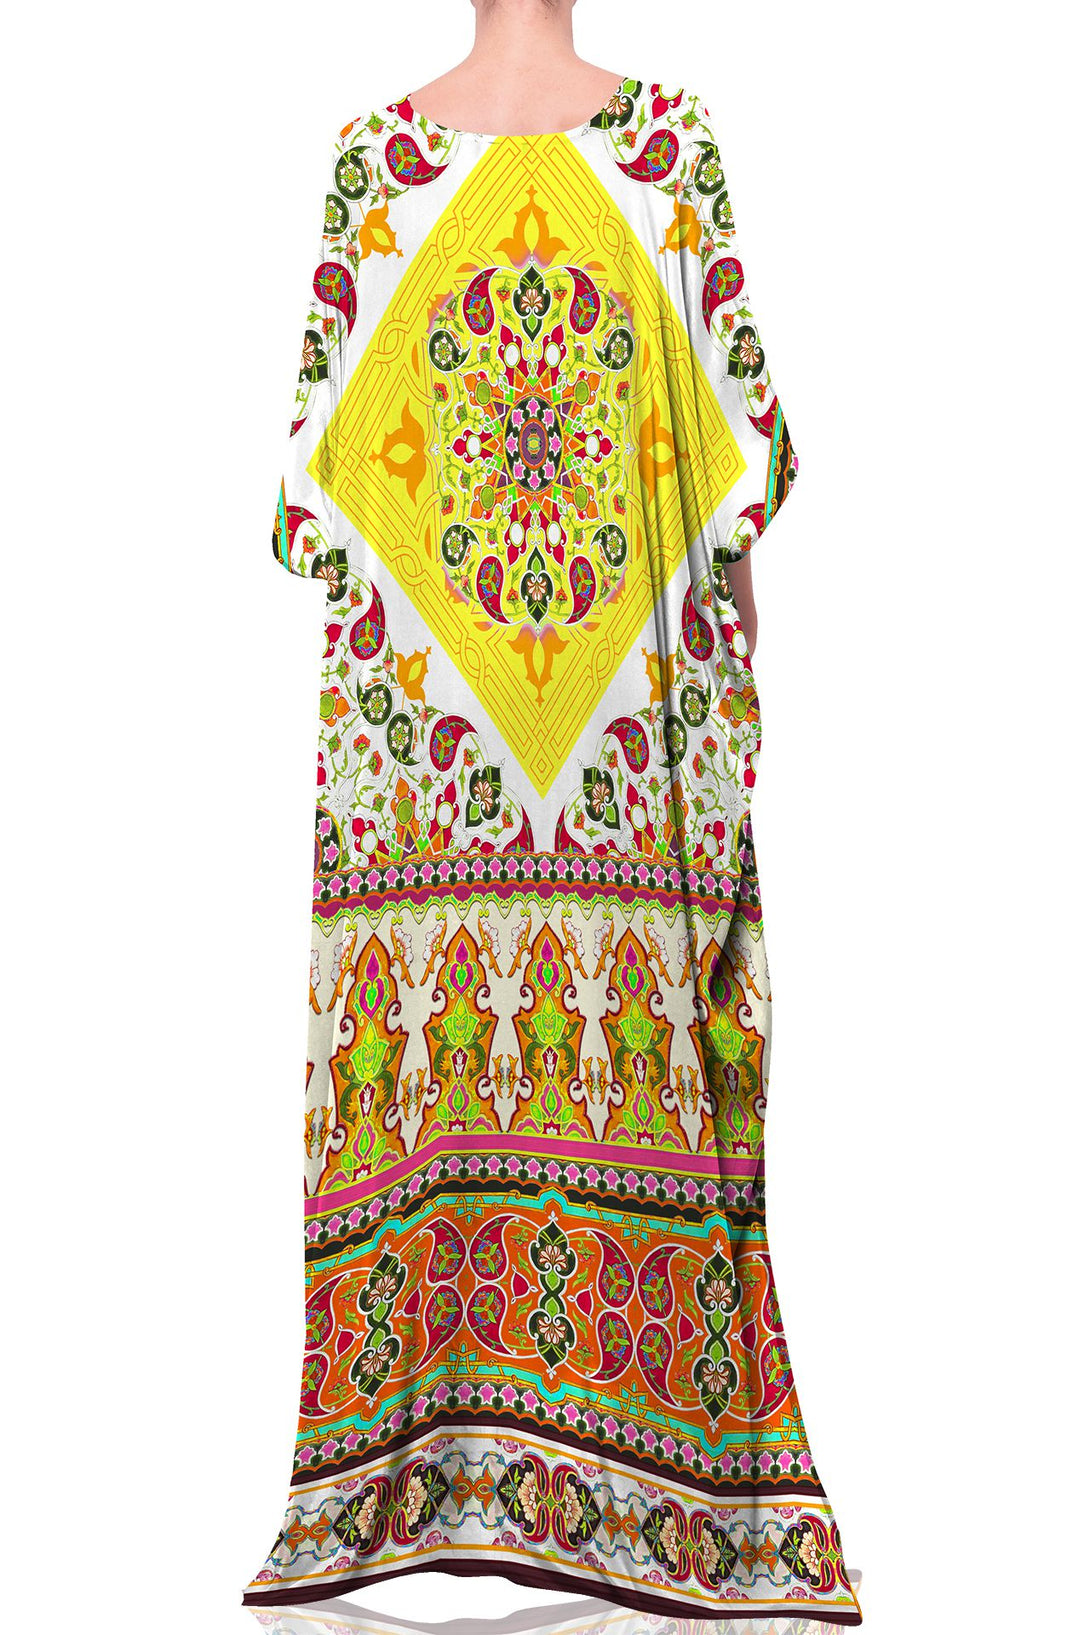 tropical dresses for vacation, cute vacation outfits, Shahida Parides, maxi kaftan,